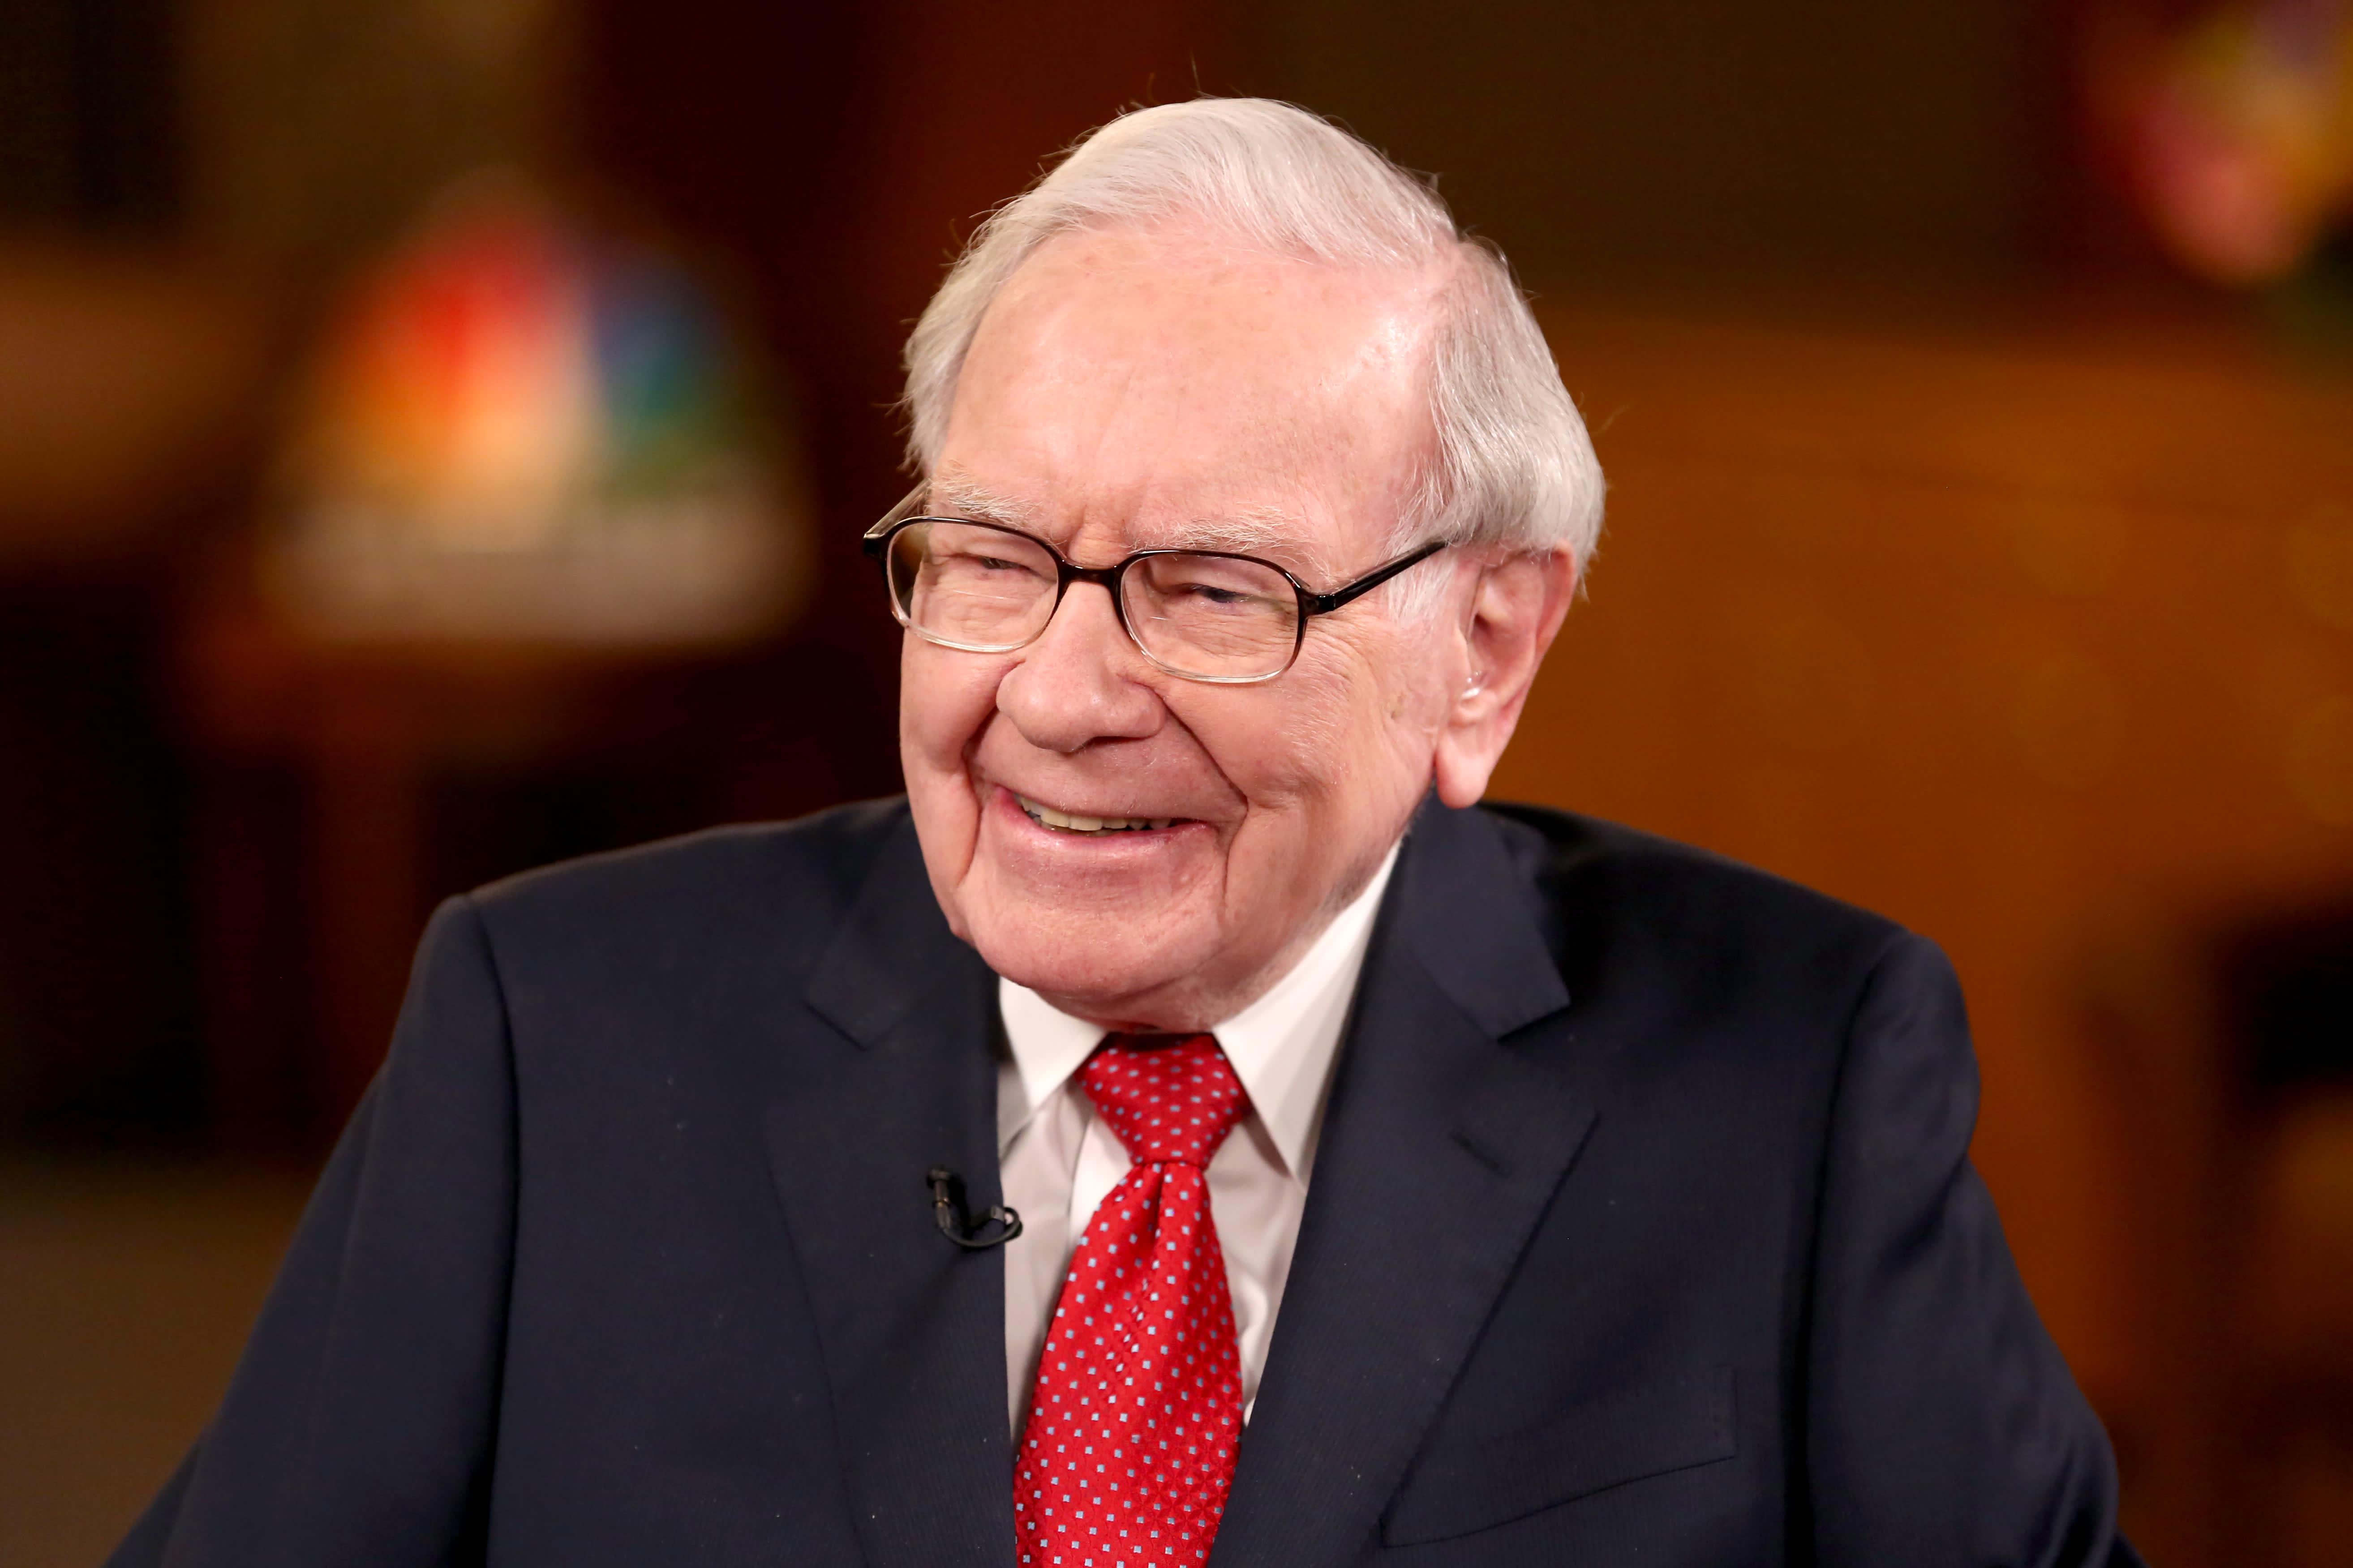 Warren Buffett’s highly anticipated annual Berkshire shareholders’ letter arrives on Saturday